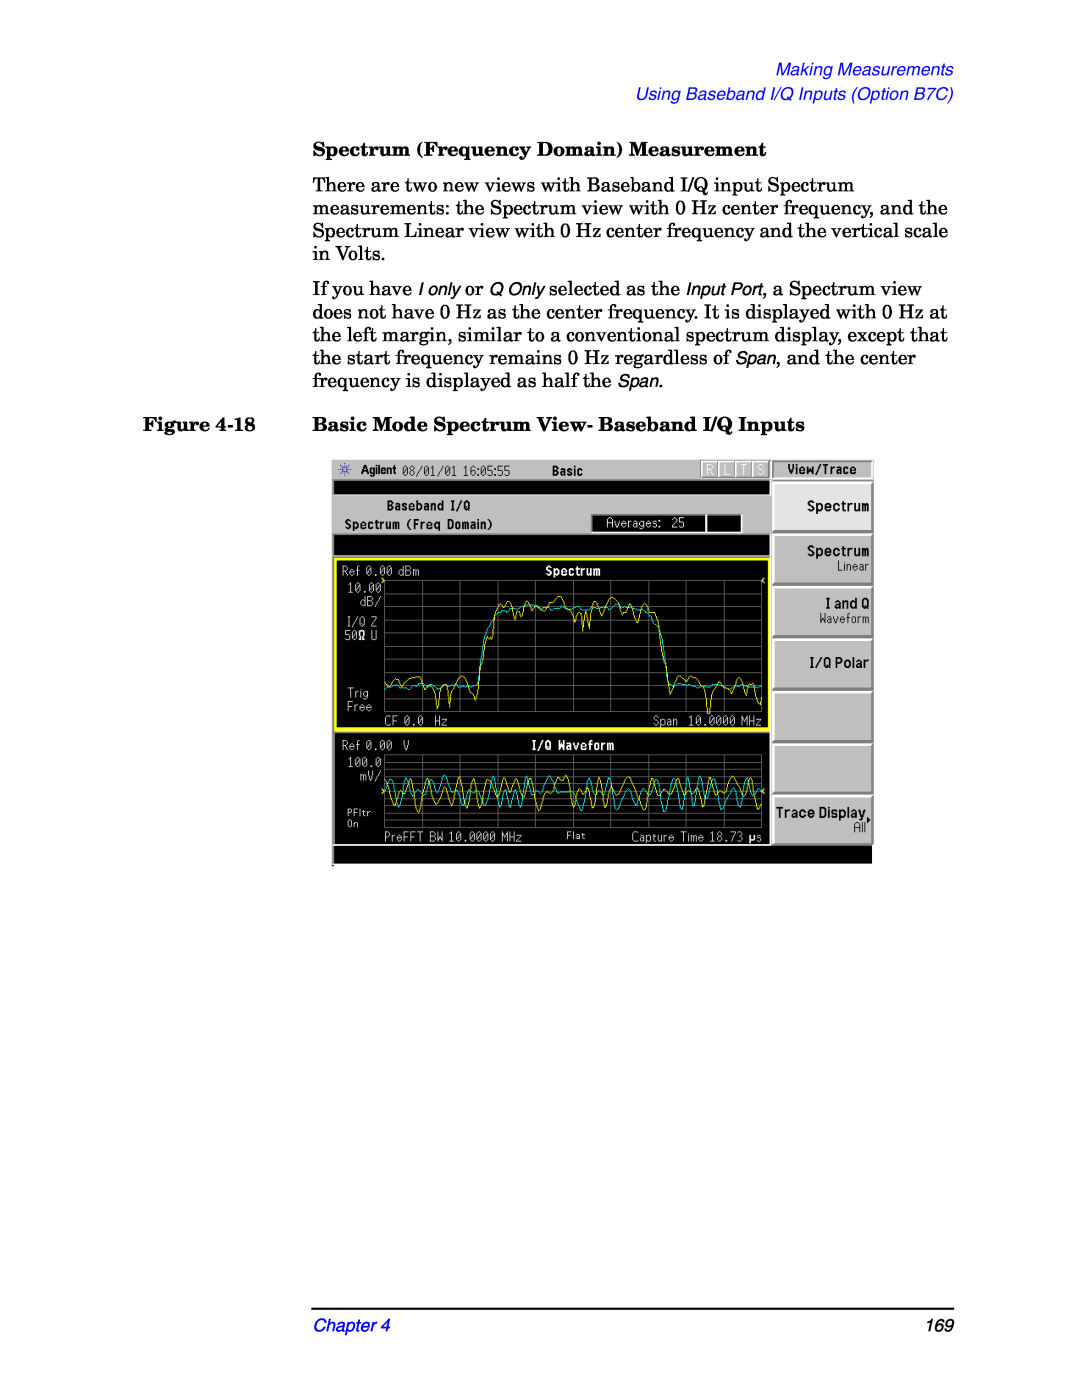 Agilent Technologies E4406A manual Spectrum Frequency Domain Measurement, Making Measurements, Chapter 